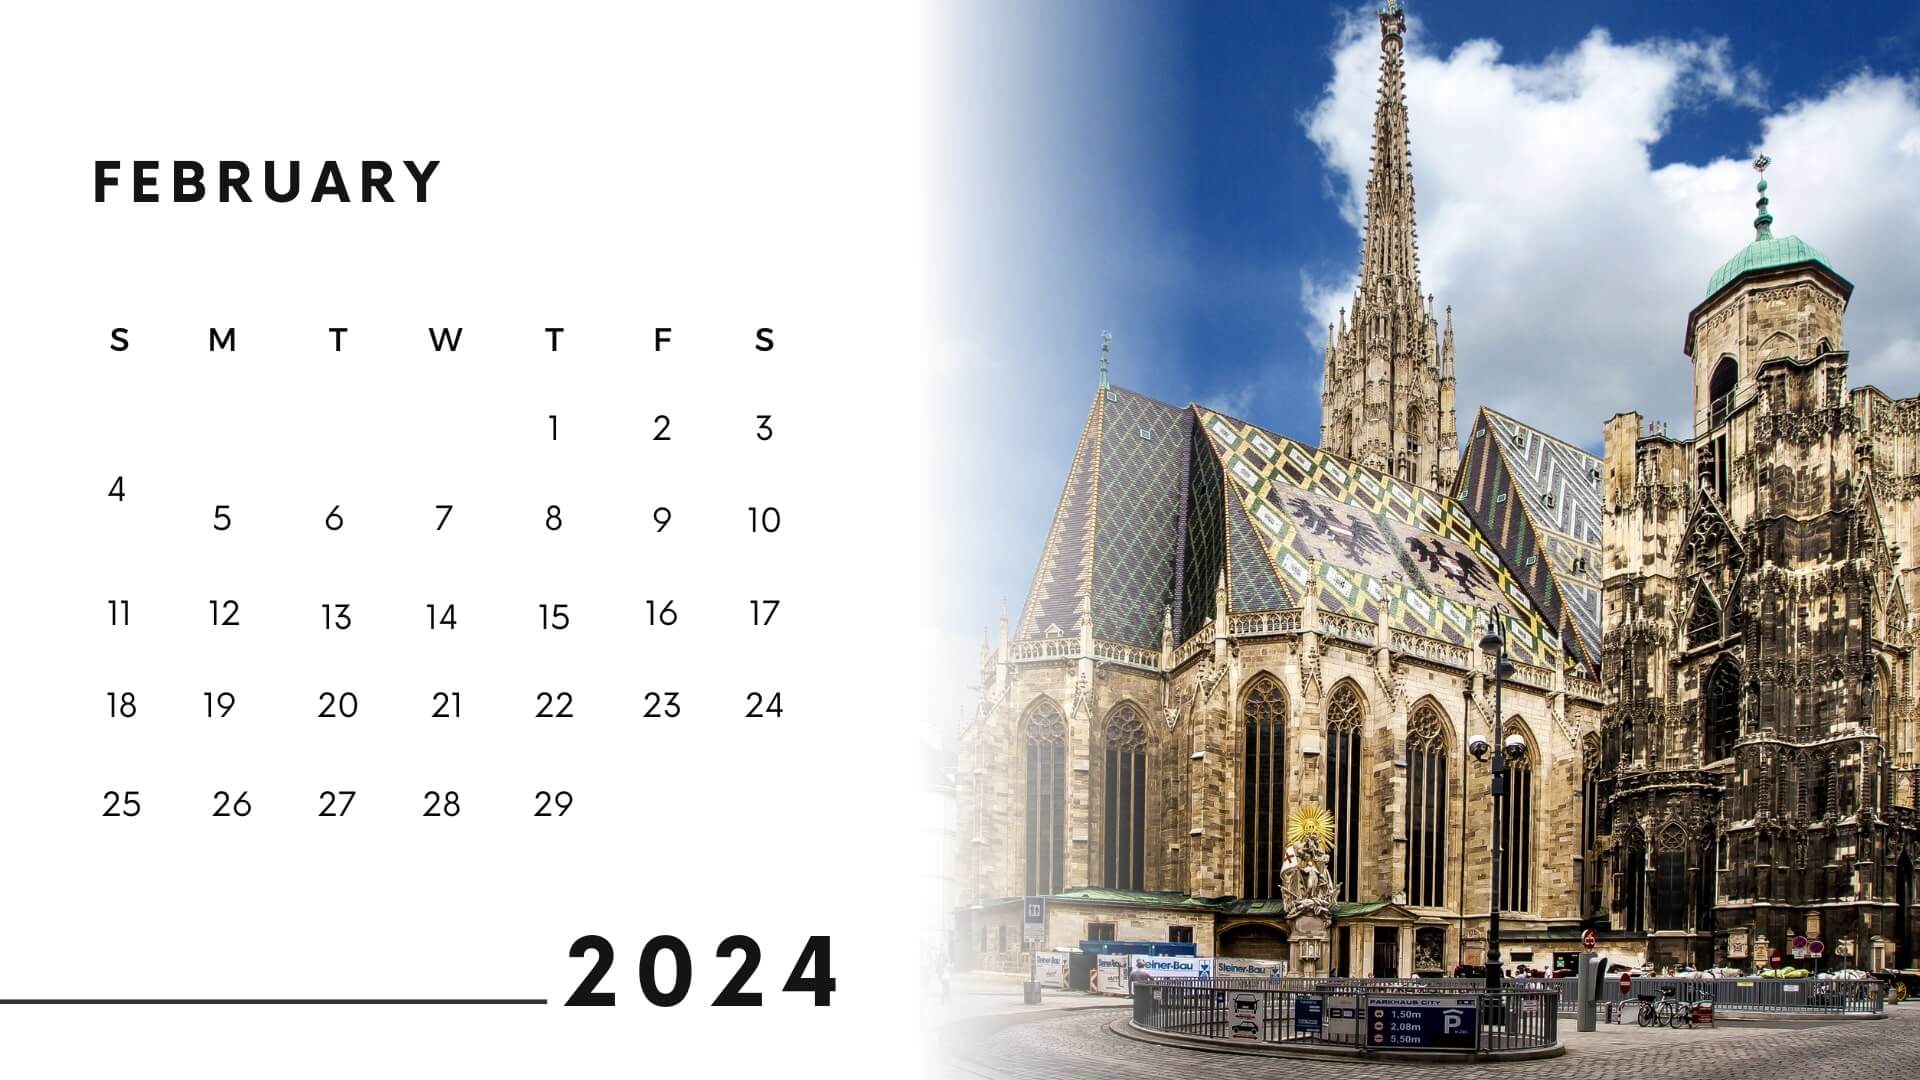 calendar 2024 february